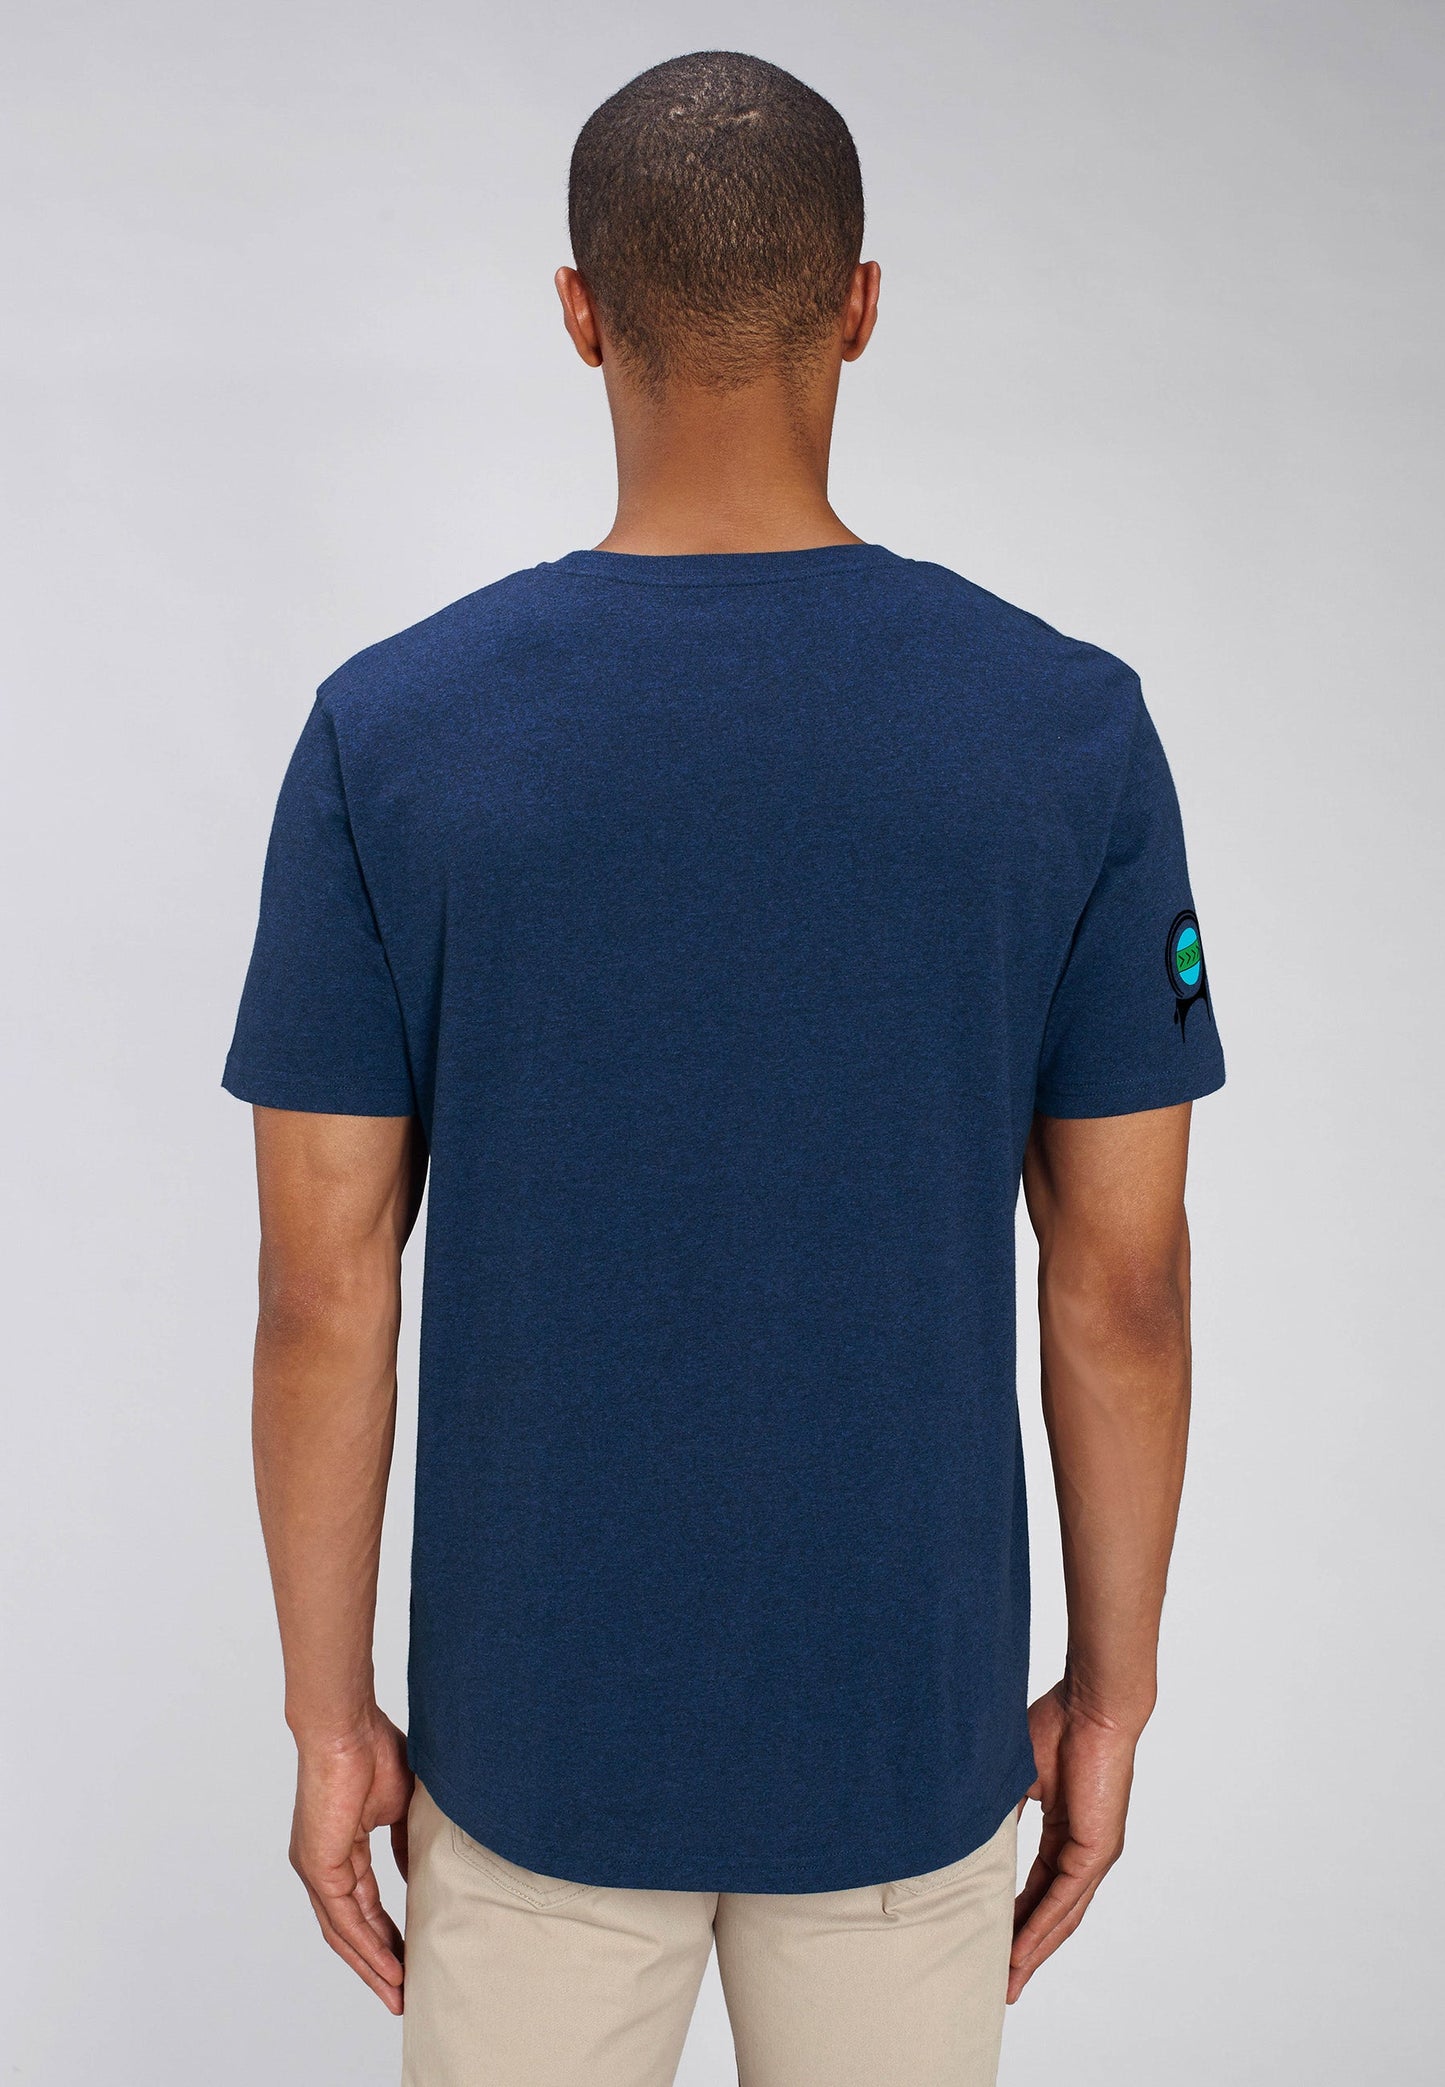 Unisex printed design tshirt Capra Afrozan - organic cotton